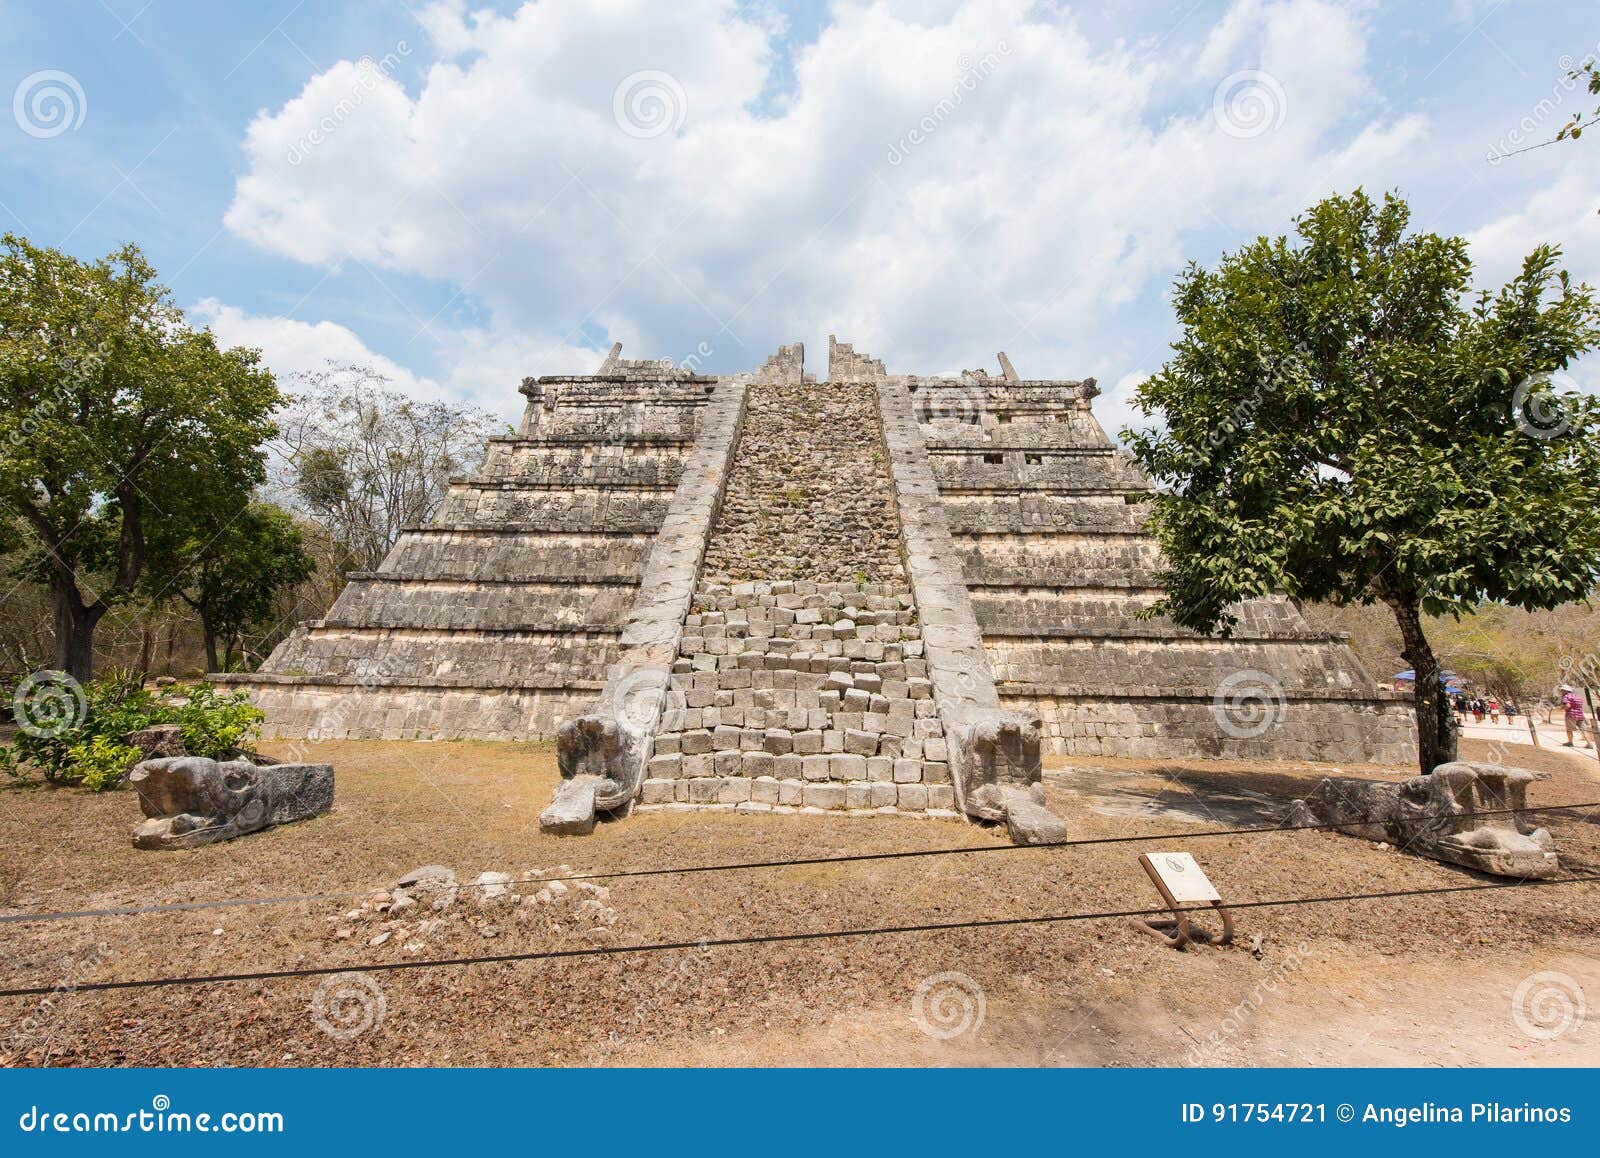 el osario o tumba del gran sacerdote, chichen itza, yucatan, mexico